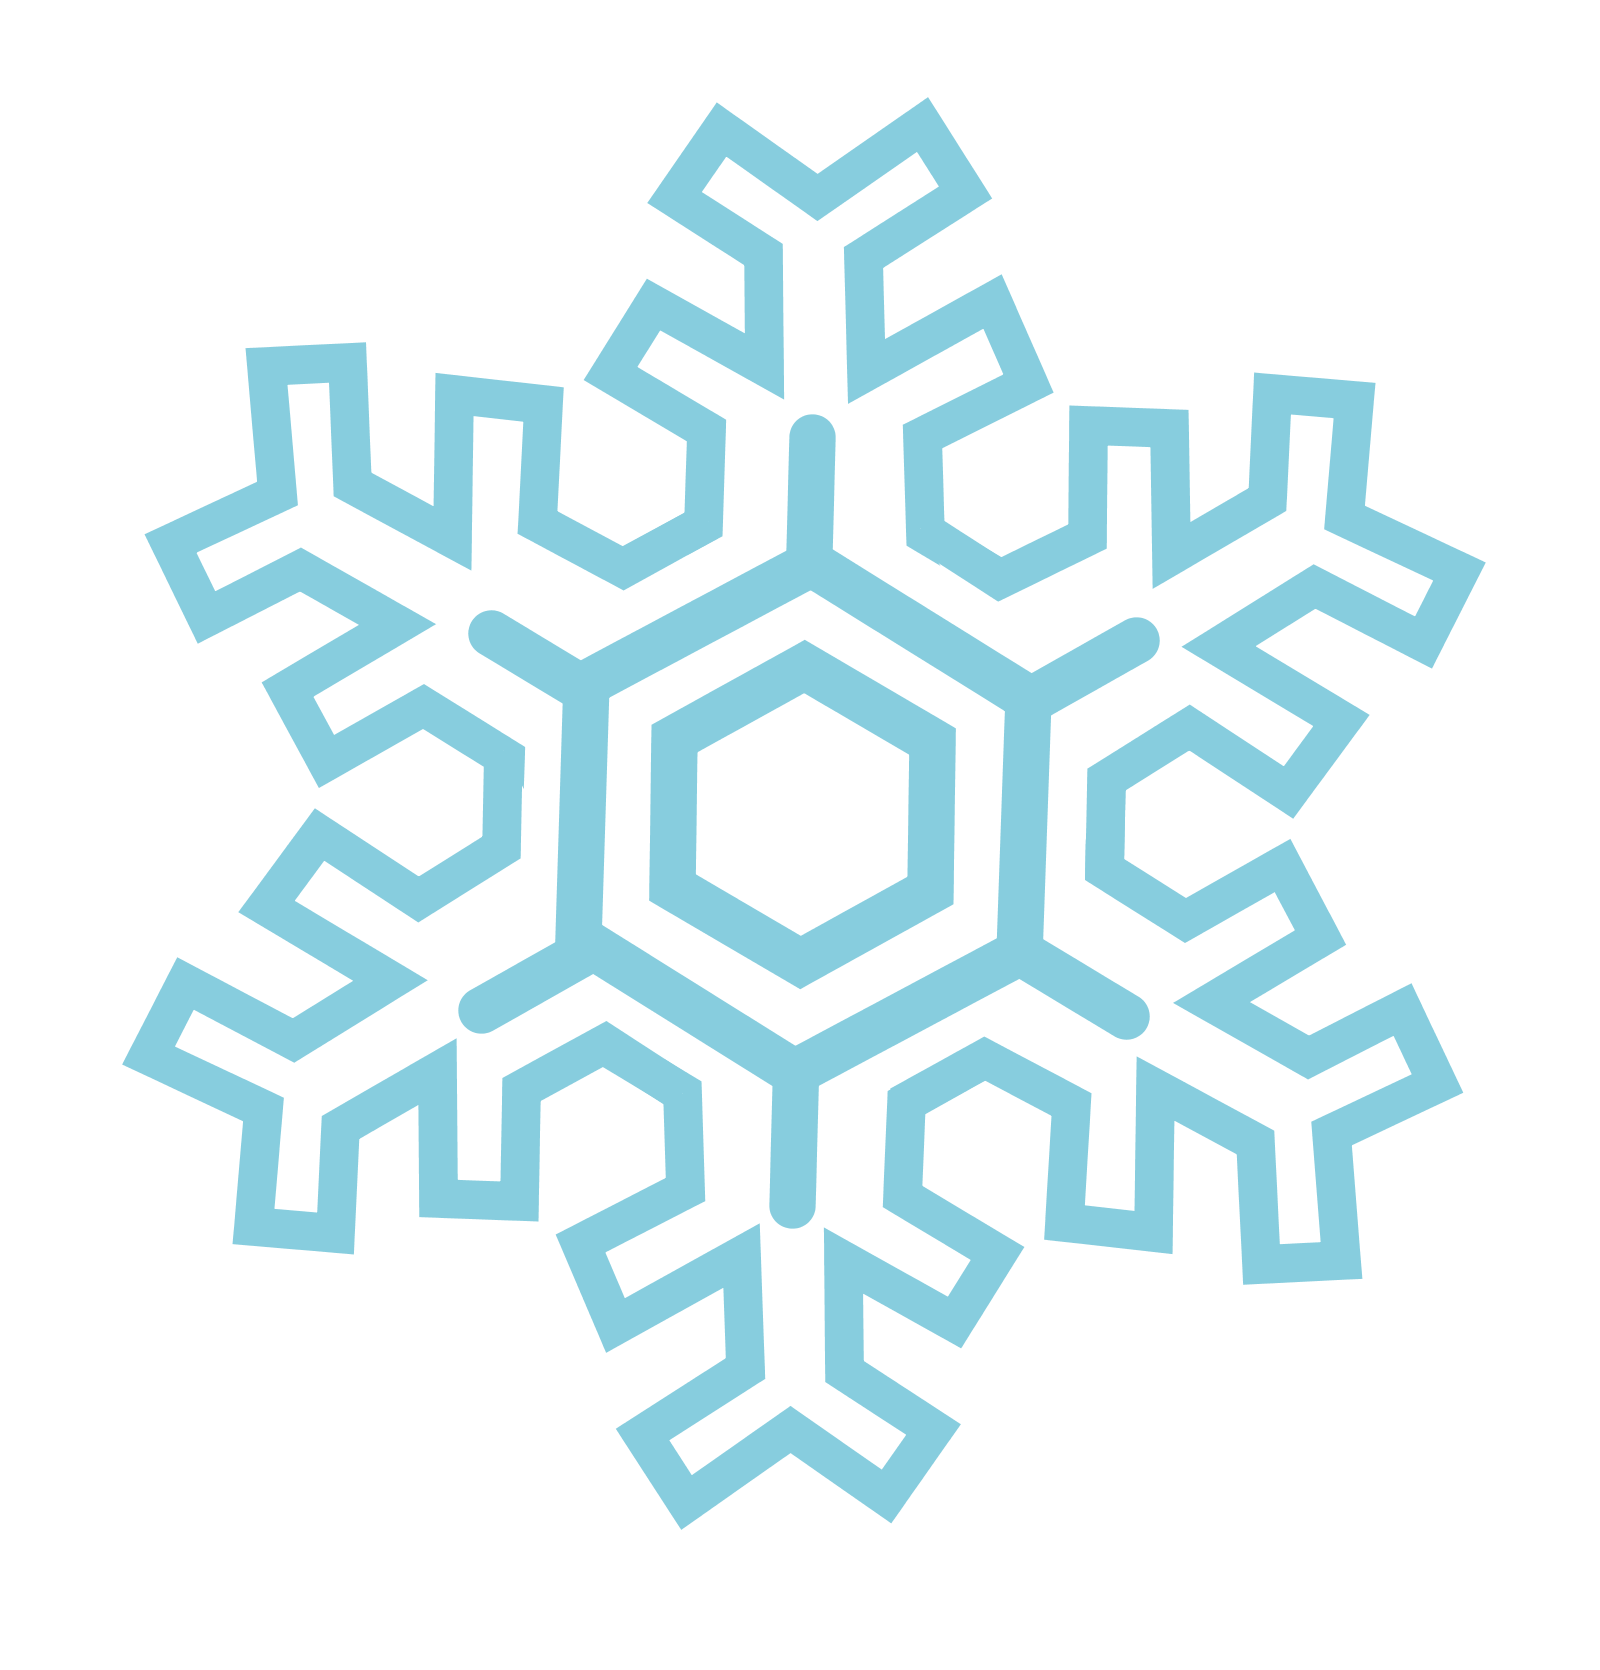 Png File Name: Snowflakes Transparent Background - Snowflakes, Transparent background PNG HD thumbnail